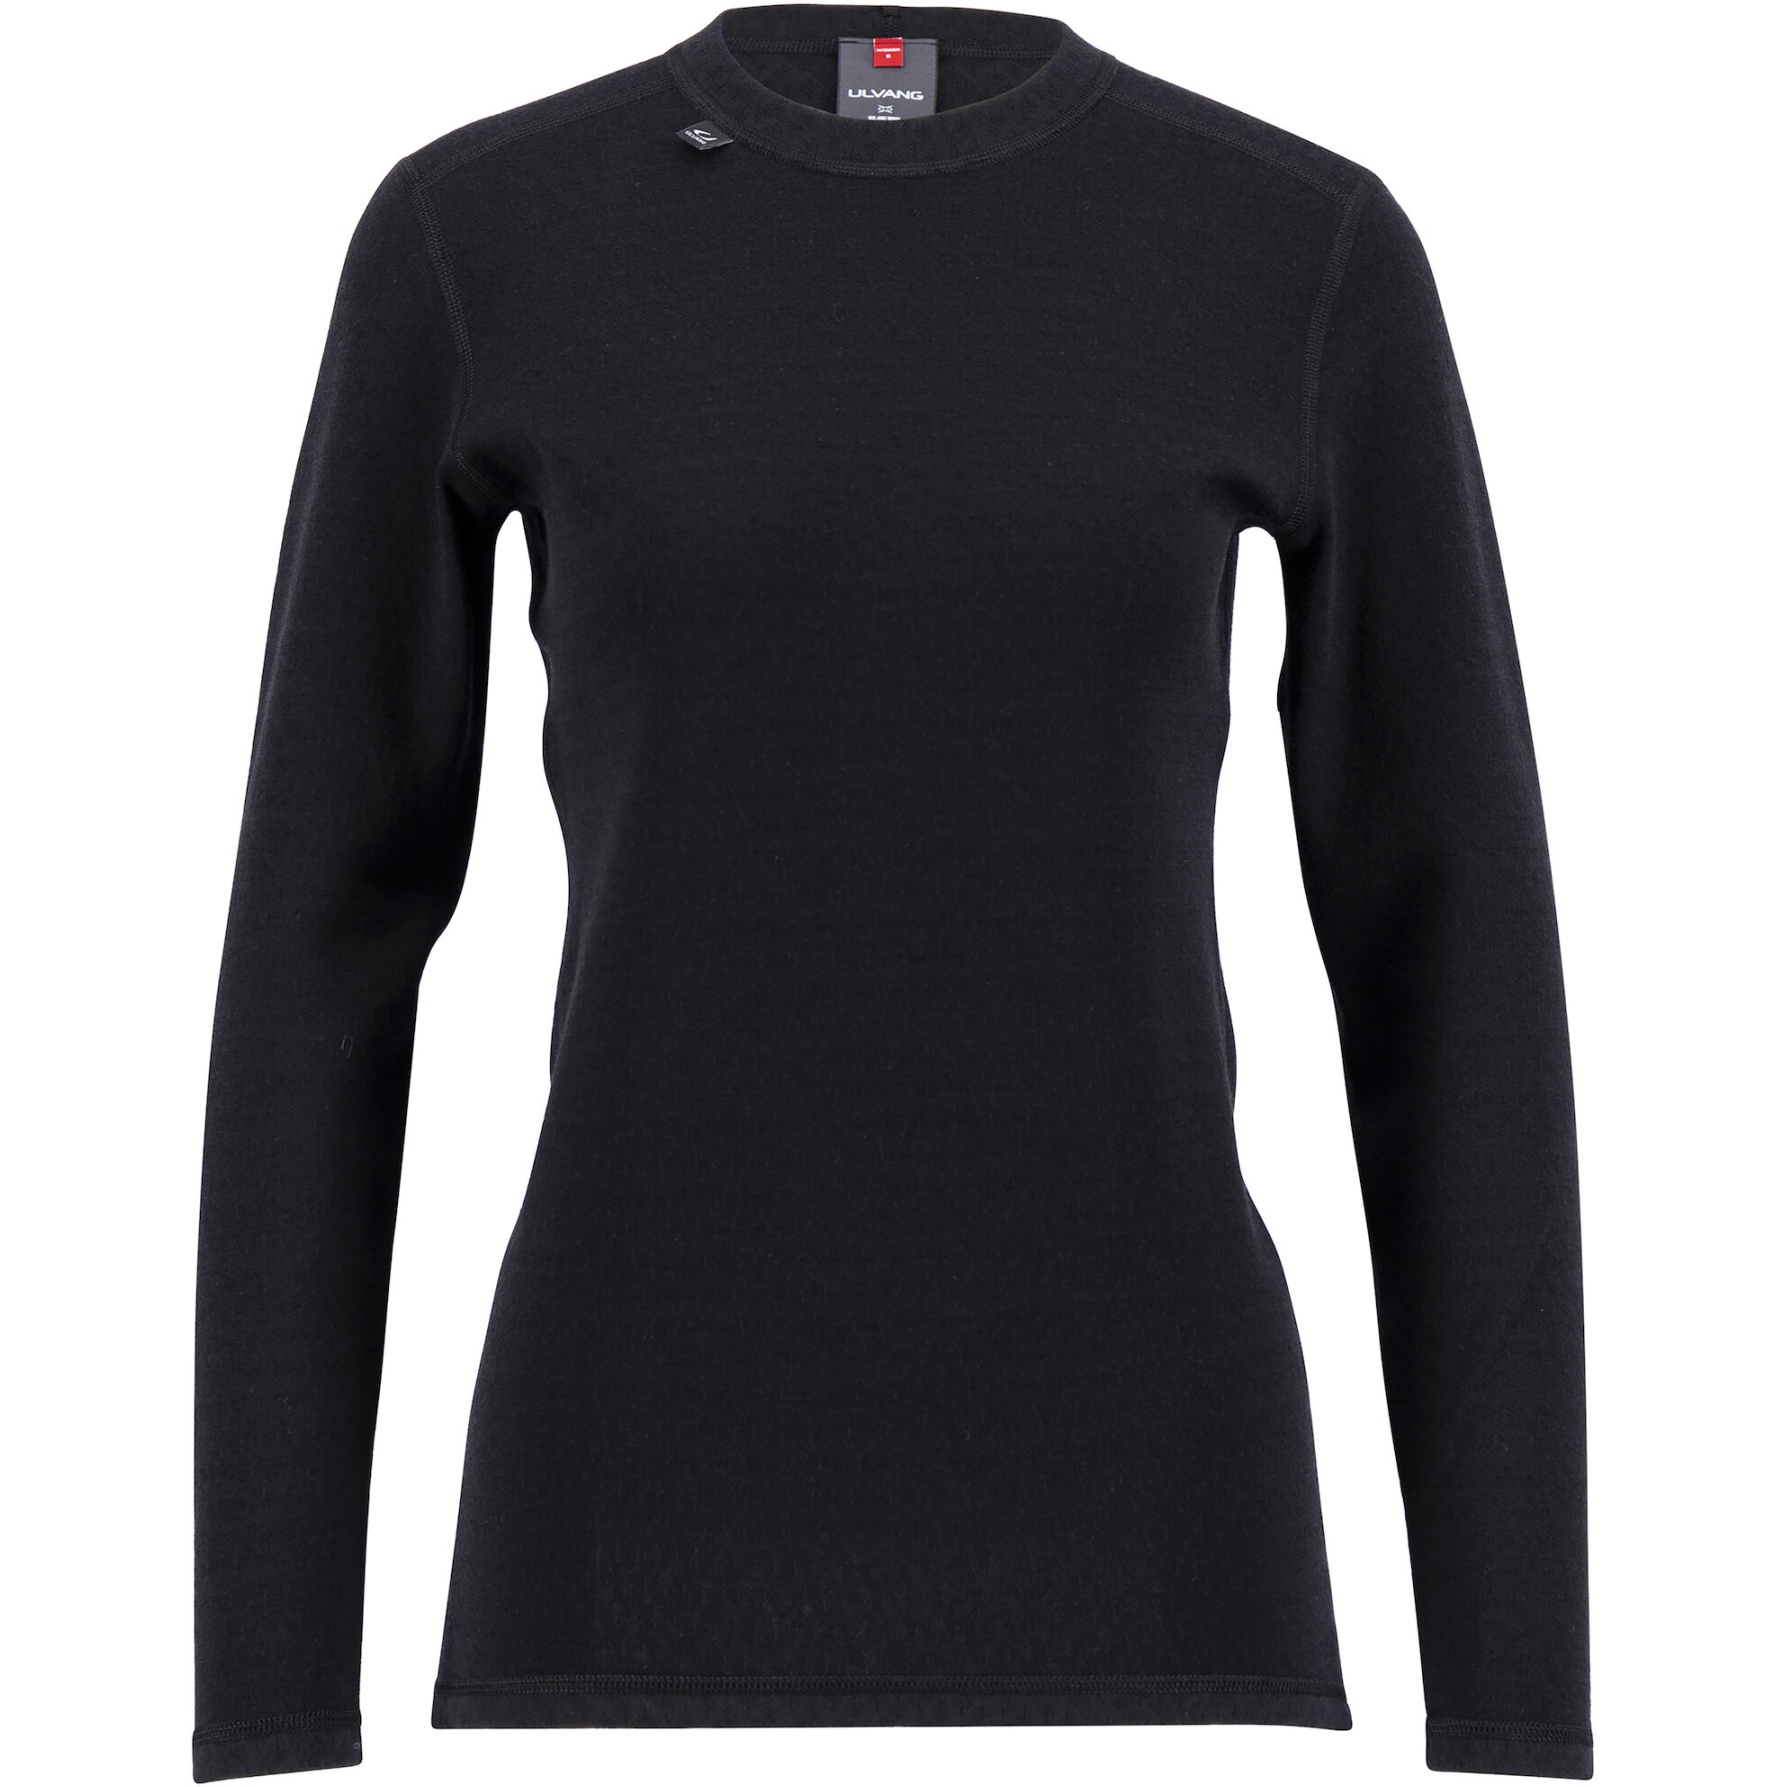 Picture of Ulvang Comfort 200 Round Neck Longsleeve Shirt Women - Black/Black